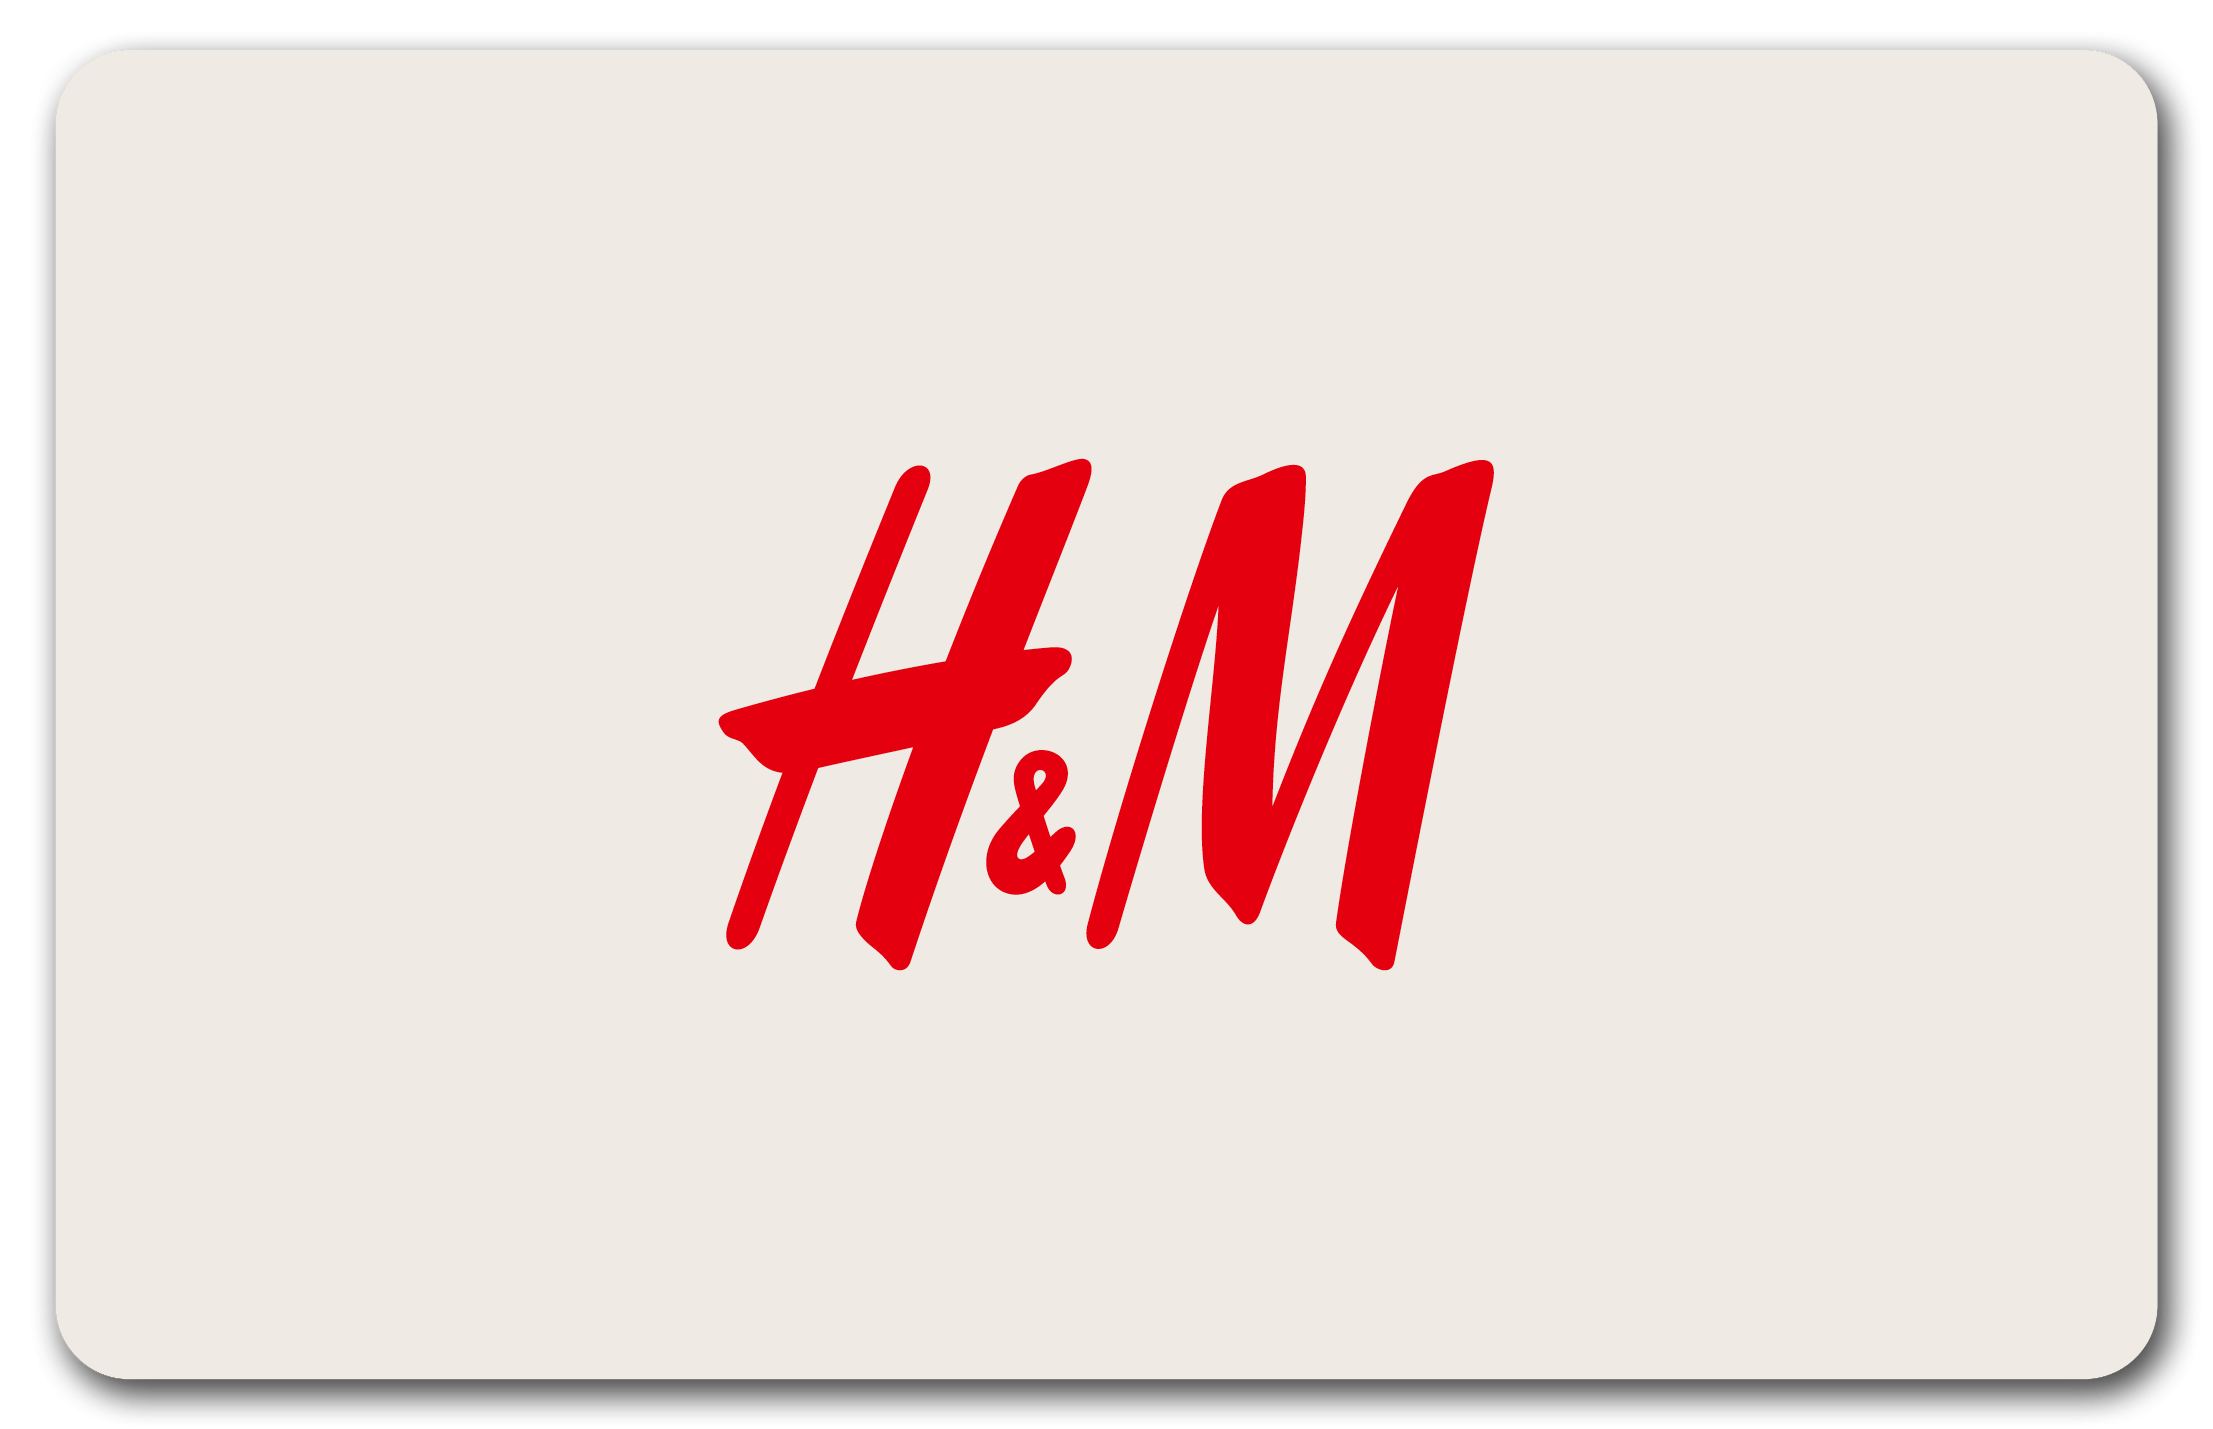 H&M Valenciennes